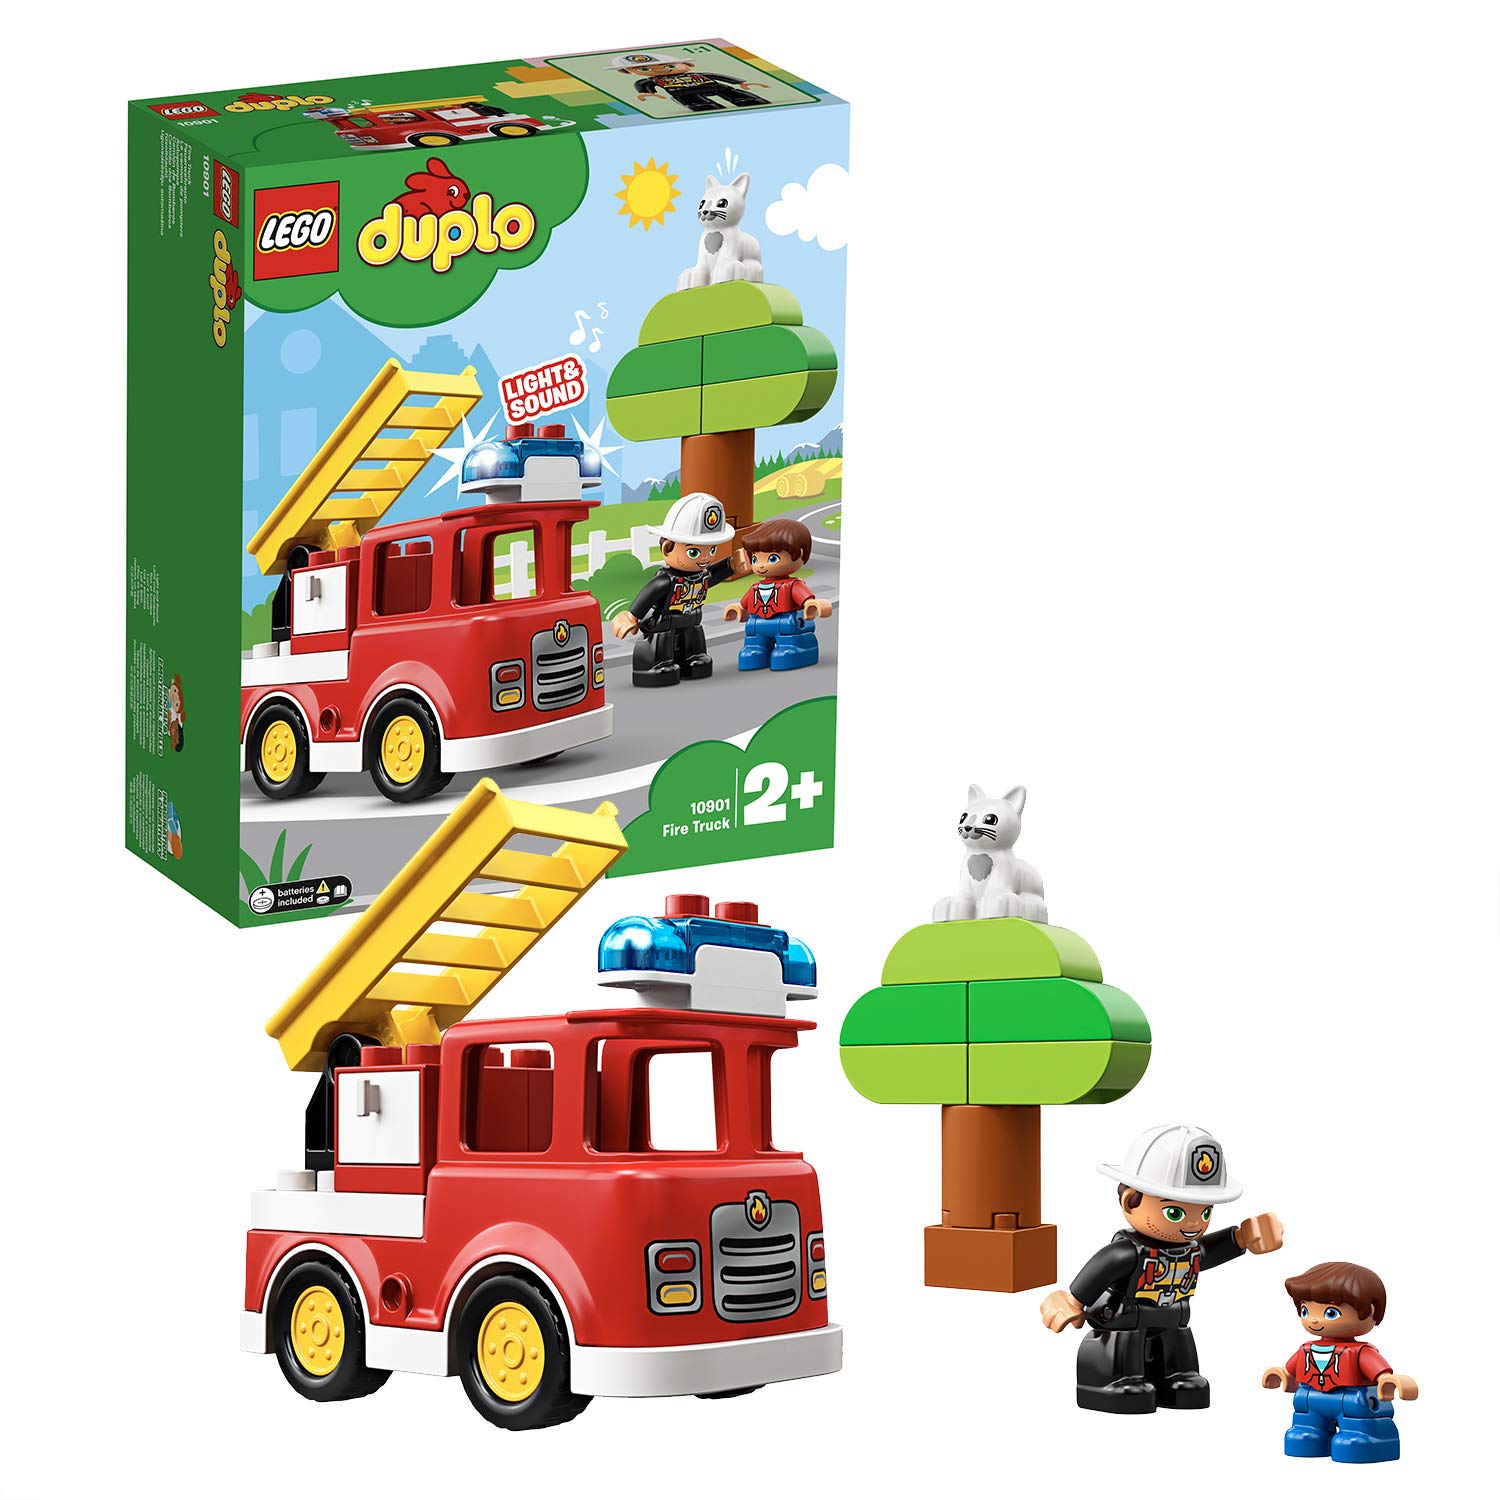 Lego Duplo 10901, Fire Engine, Toy